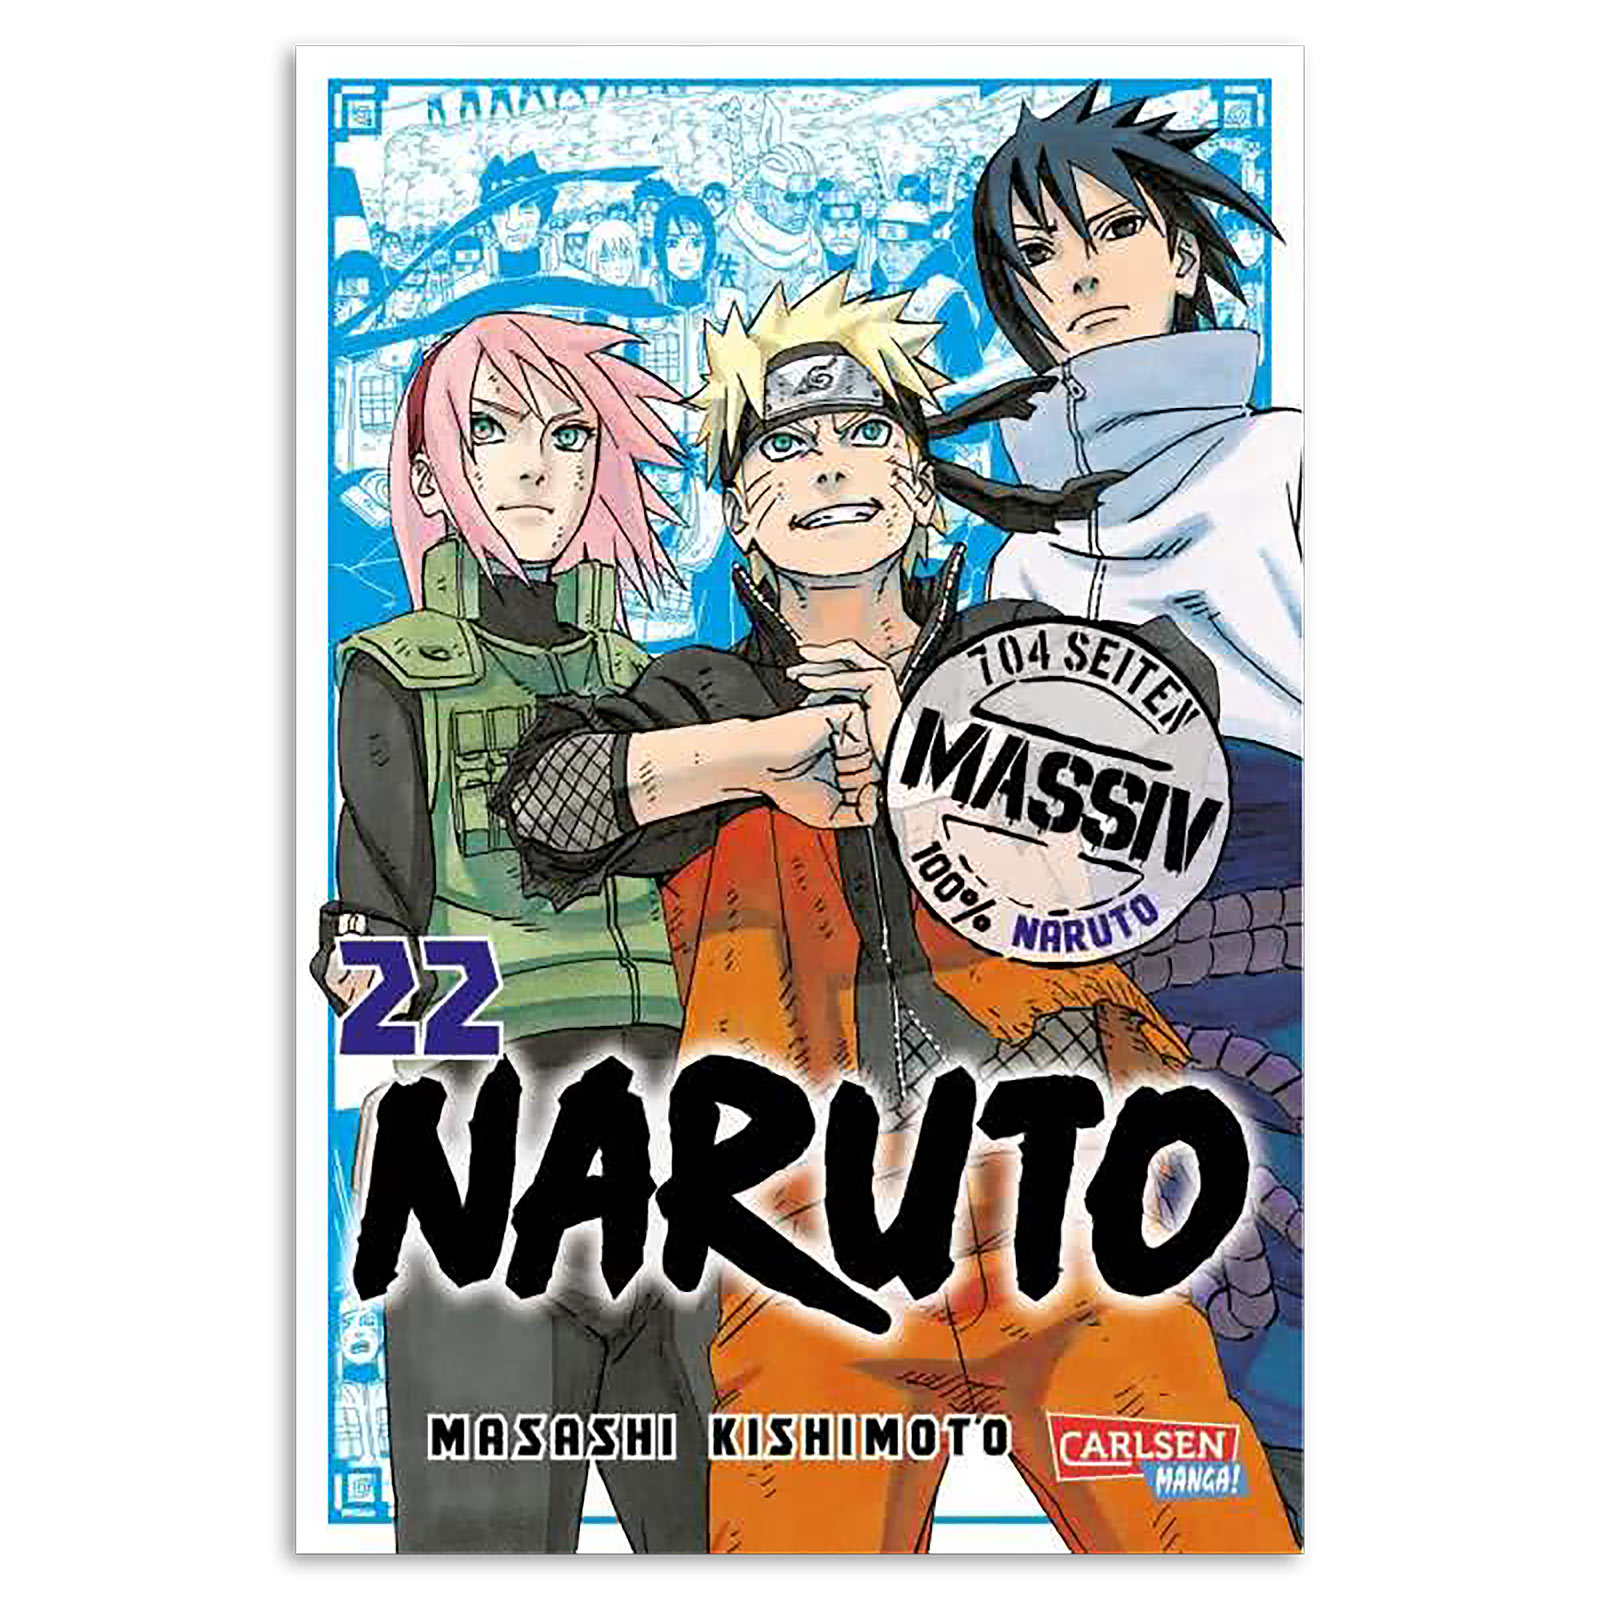 Naruto - Collection Volume 22 Paperback